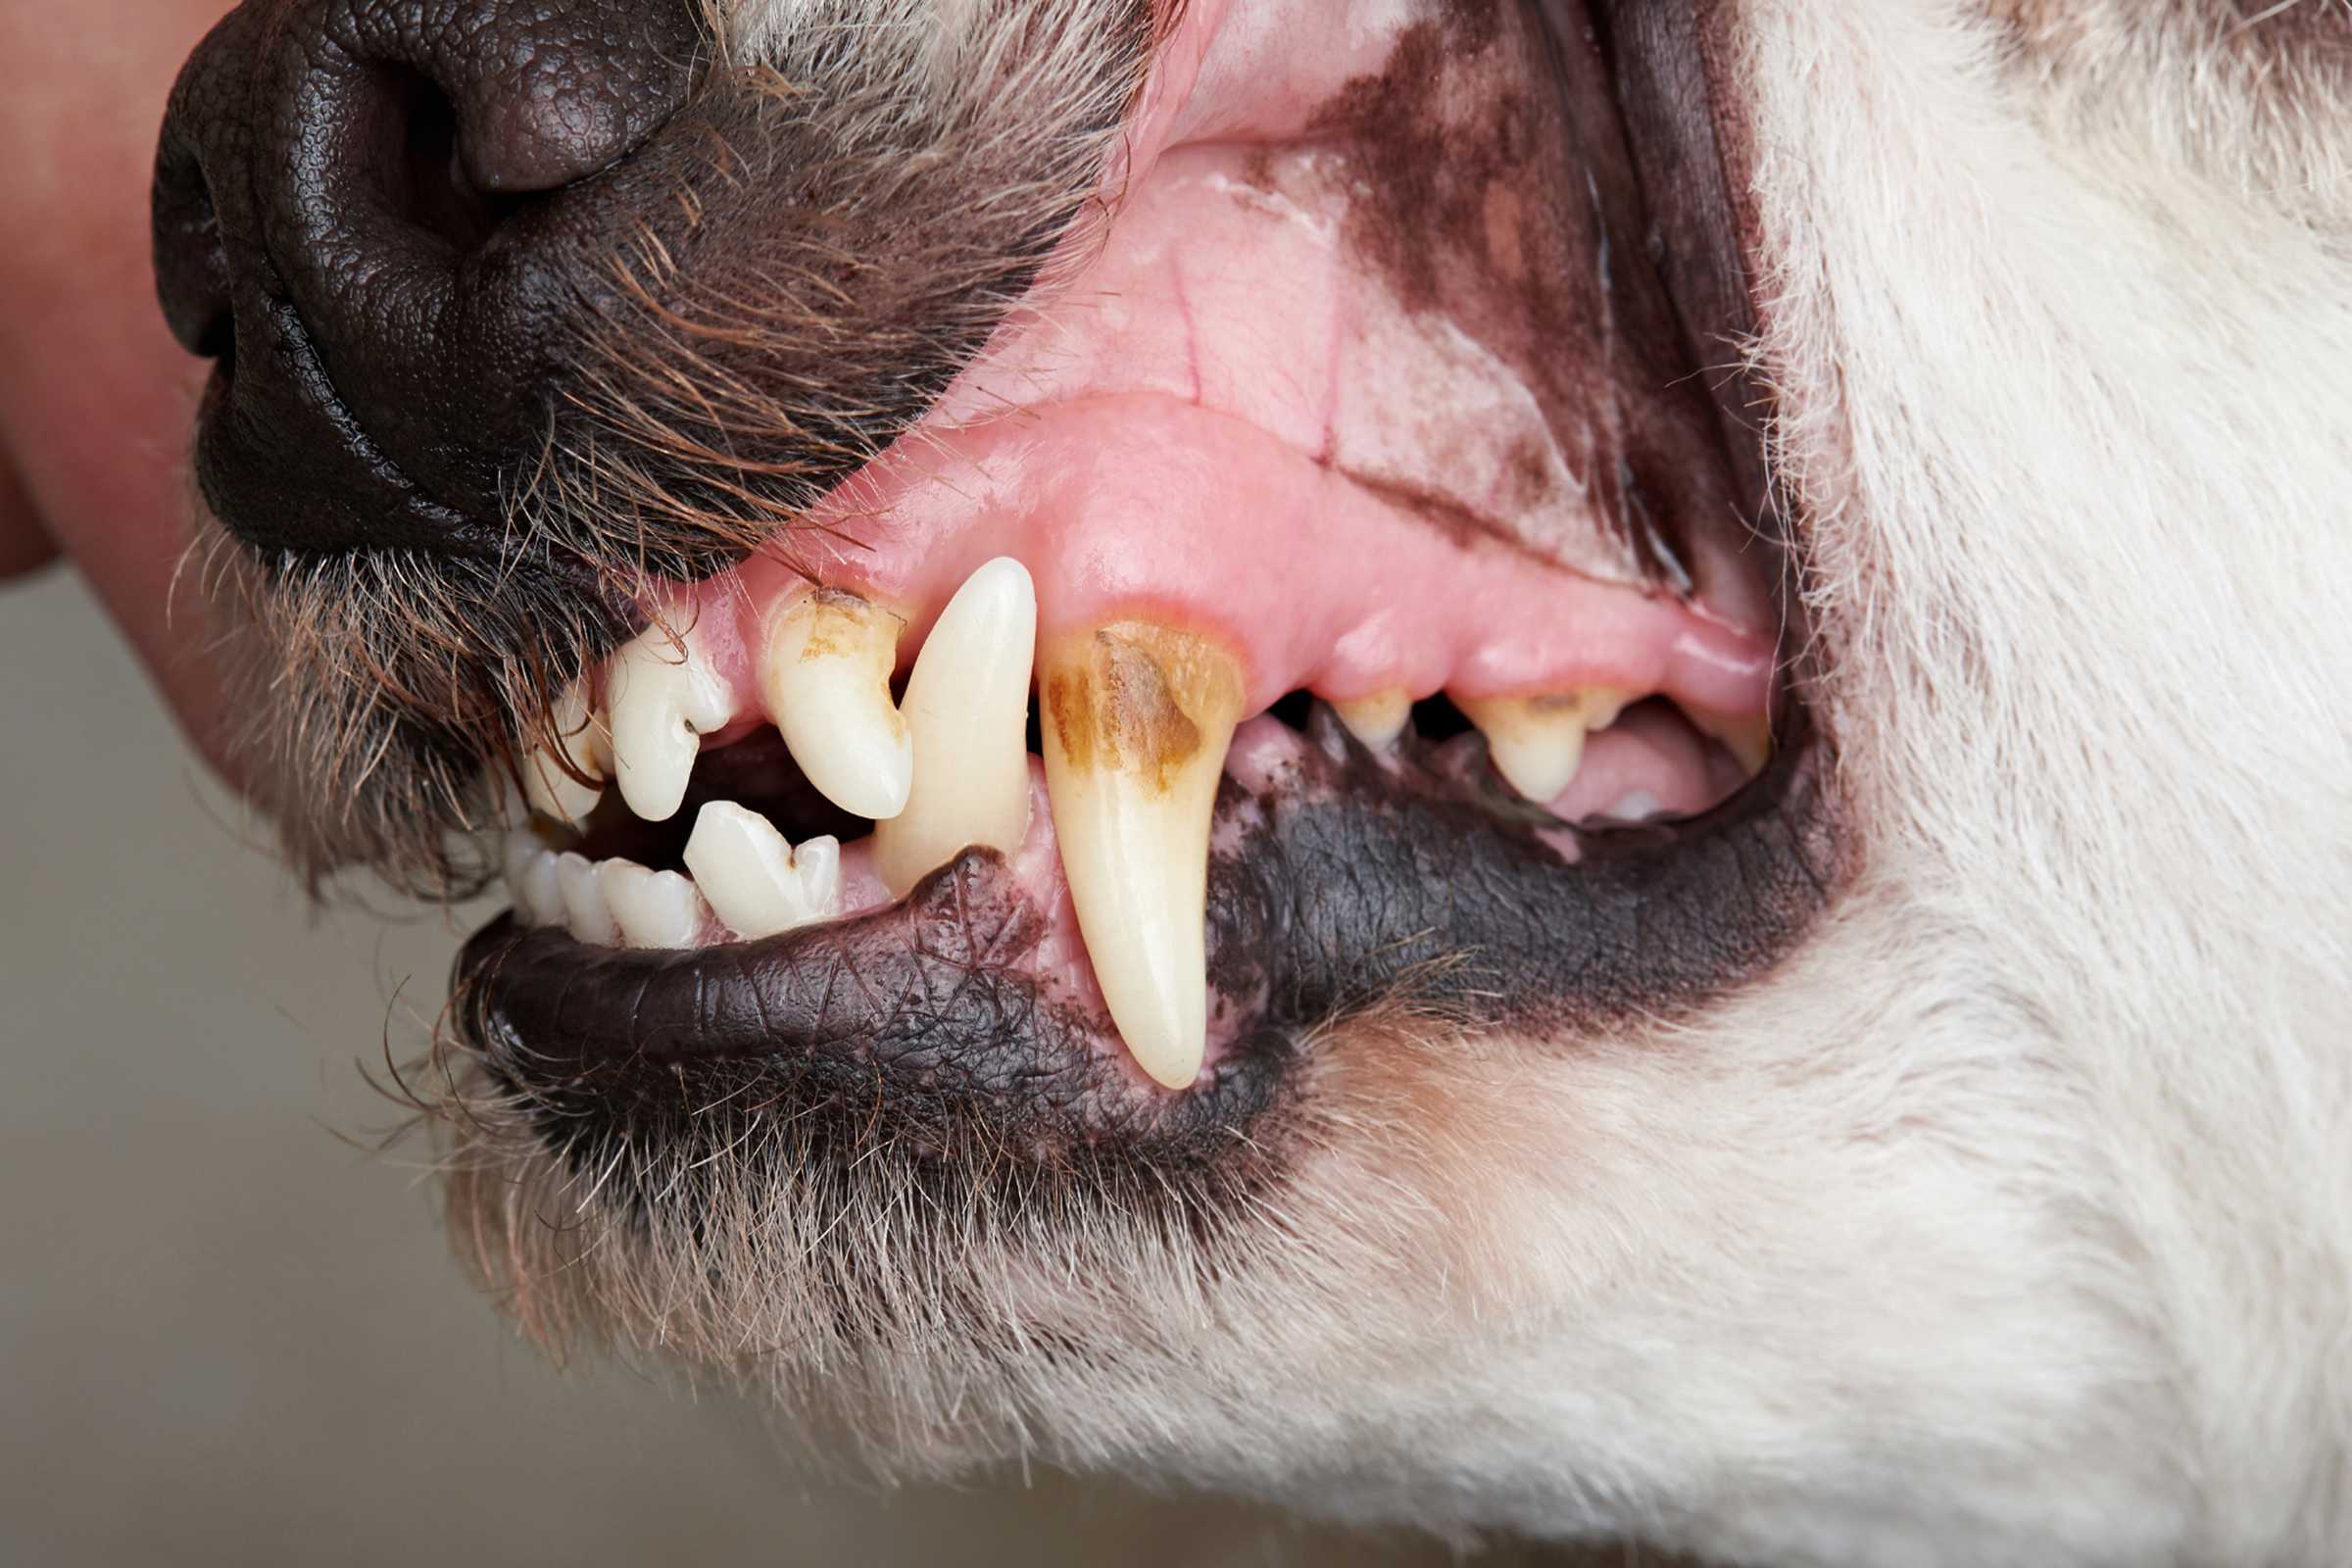 Symptoms Of Canine Dental Disease Dog With Tartar Build Up On Teeth